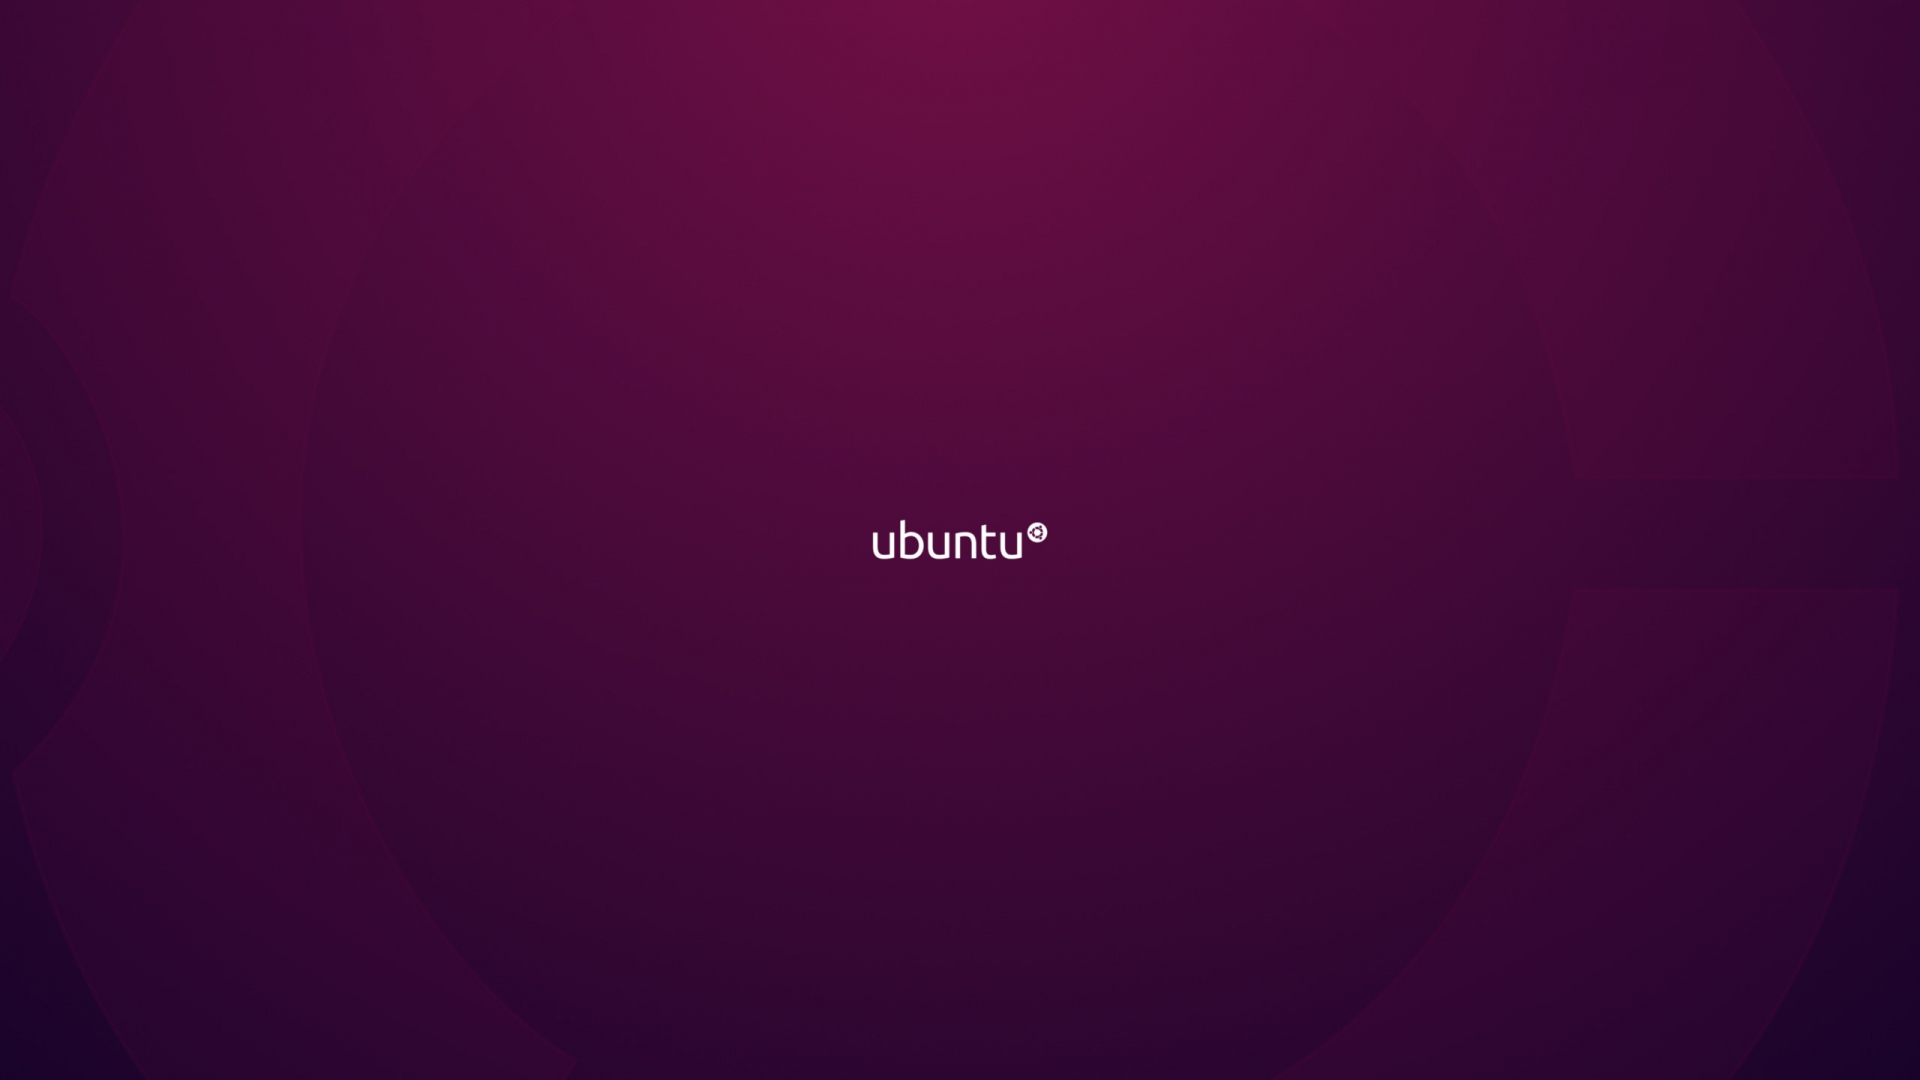 Ubuntu Purple for 1920 x 1080 HDTV 1080p resolution